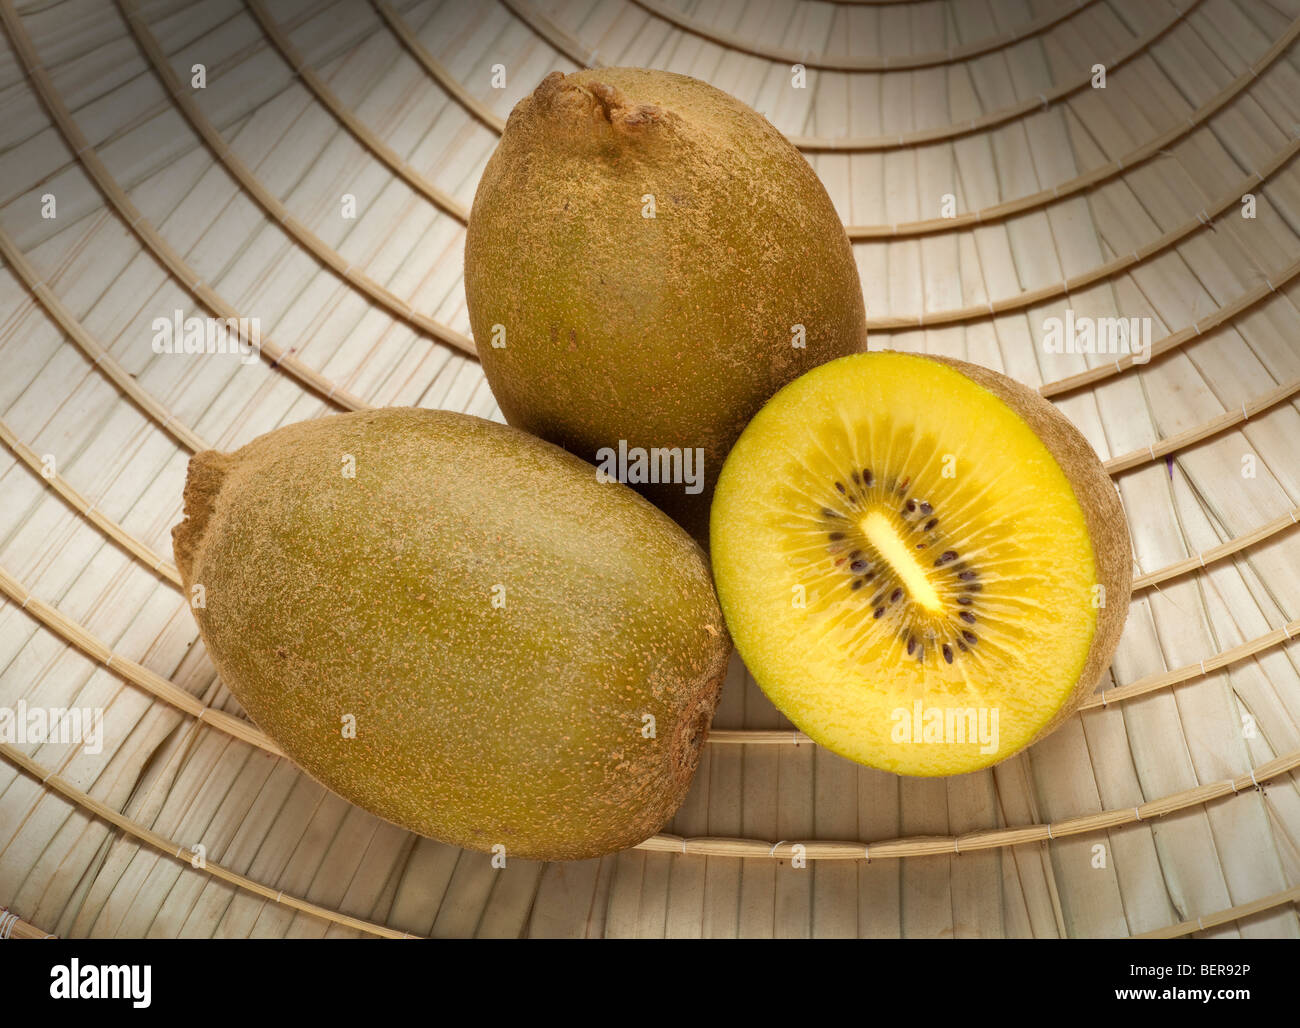 Gold Kiwifruit or 'Hinabelle cultivar, cut flesh showing interior Stock Photo